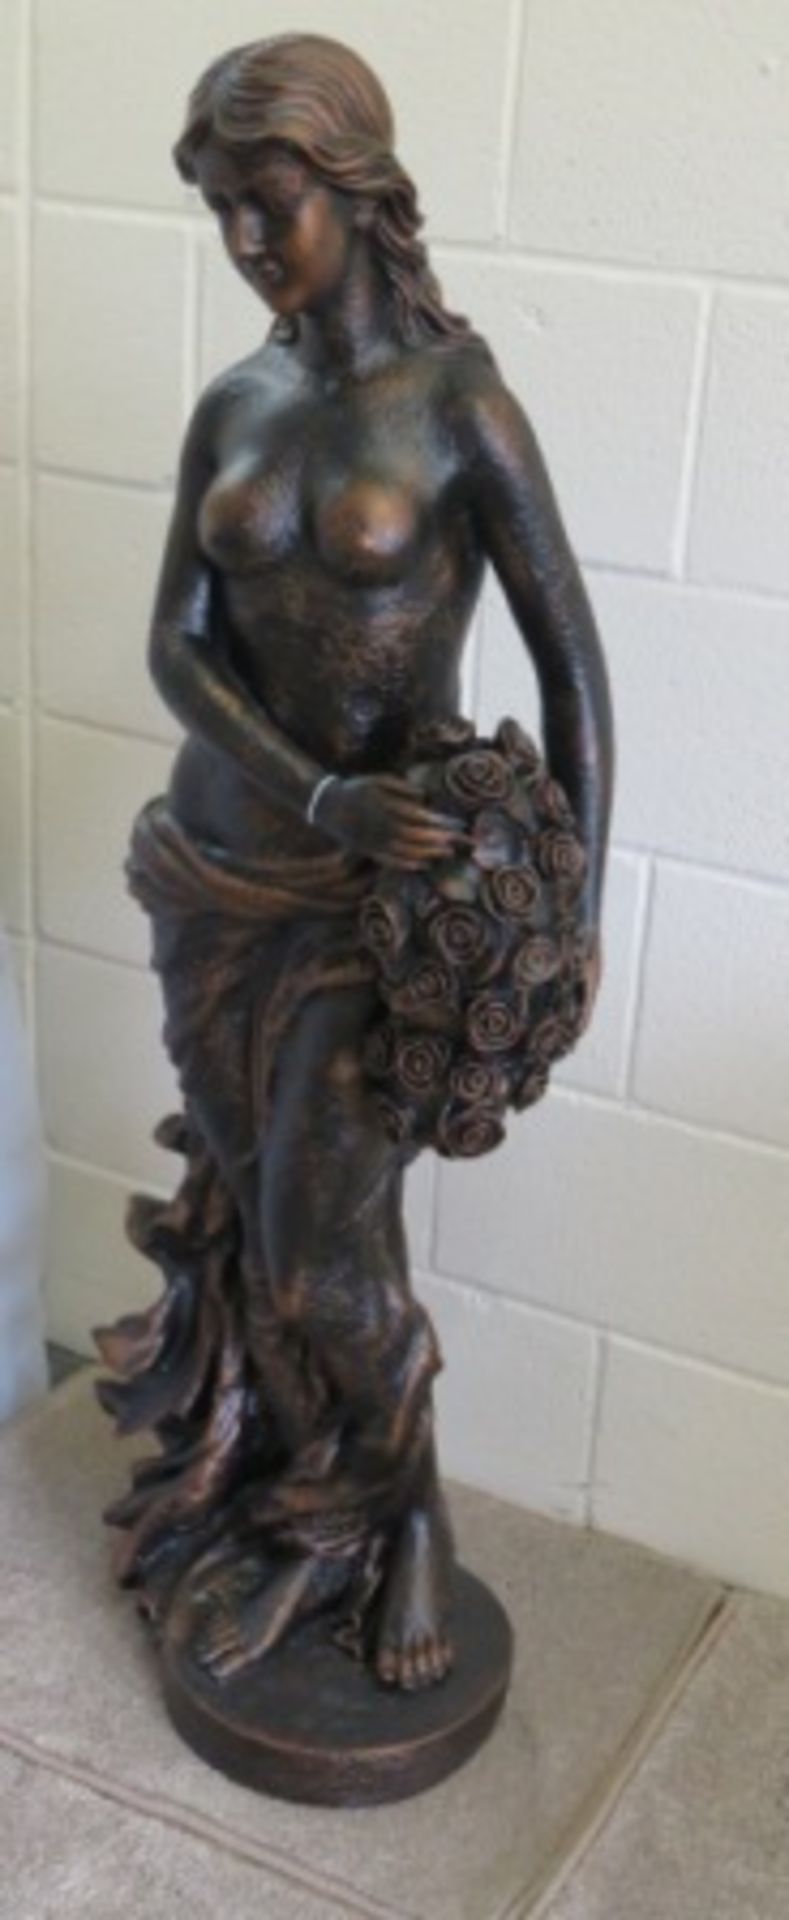 Bronzed Female Figurine - 5 Feet Tall - Image 2 of 4